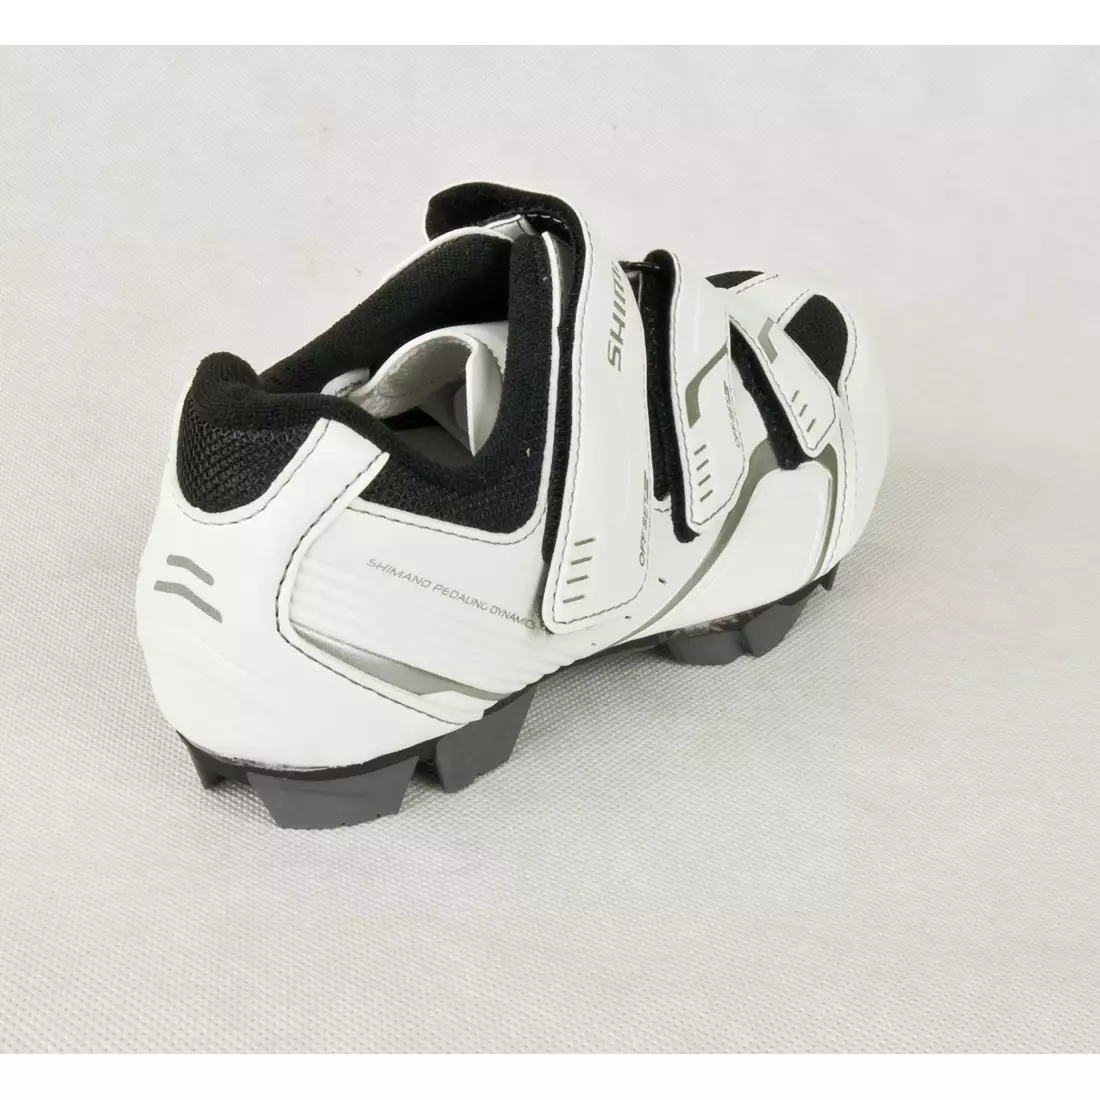 SHIMANO SH-WM52 - dámská cyklistická obuv, bílá